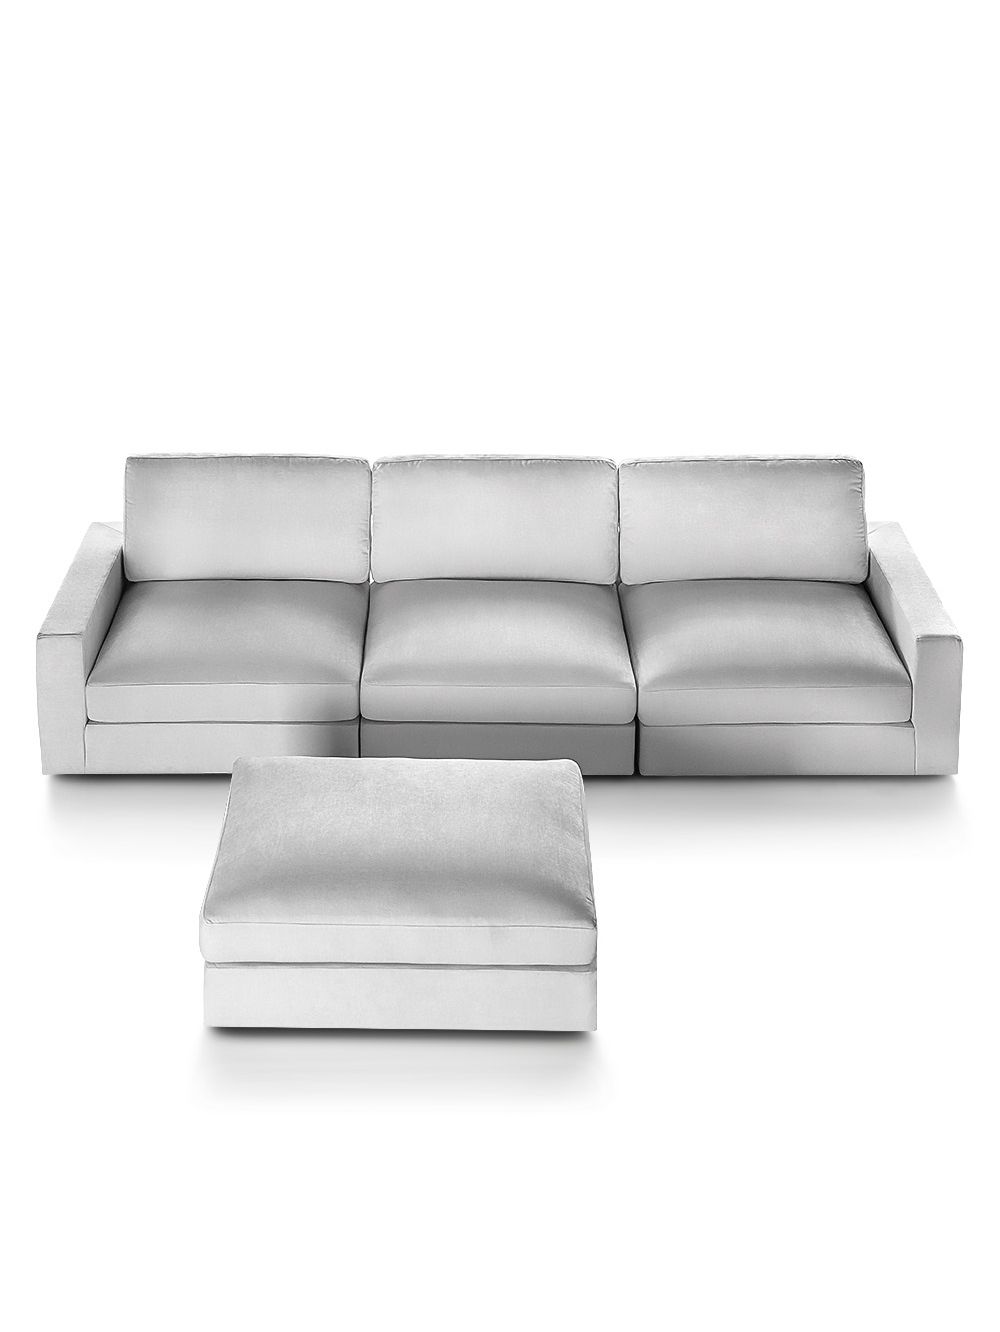 Sofa-esquinero-de-modulos-blancos-SOFA-BELMONT-LEYEND01-BLANCO-Landmark-5